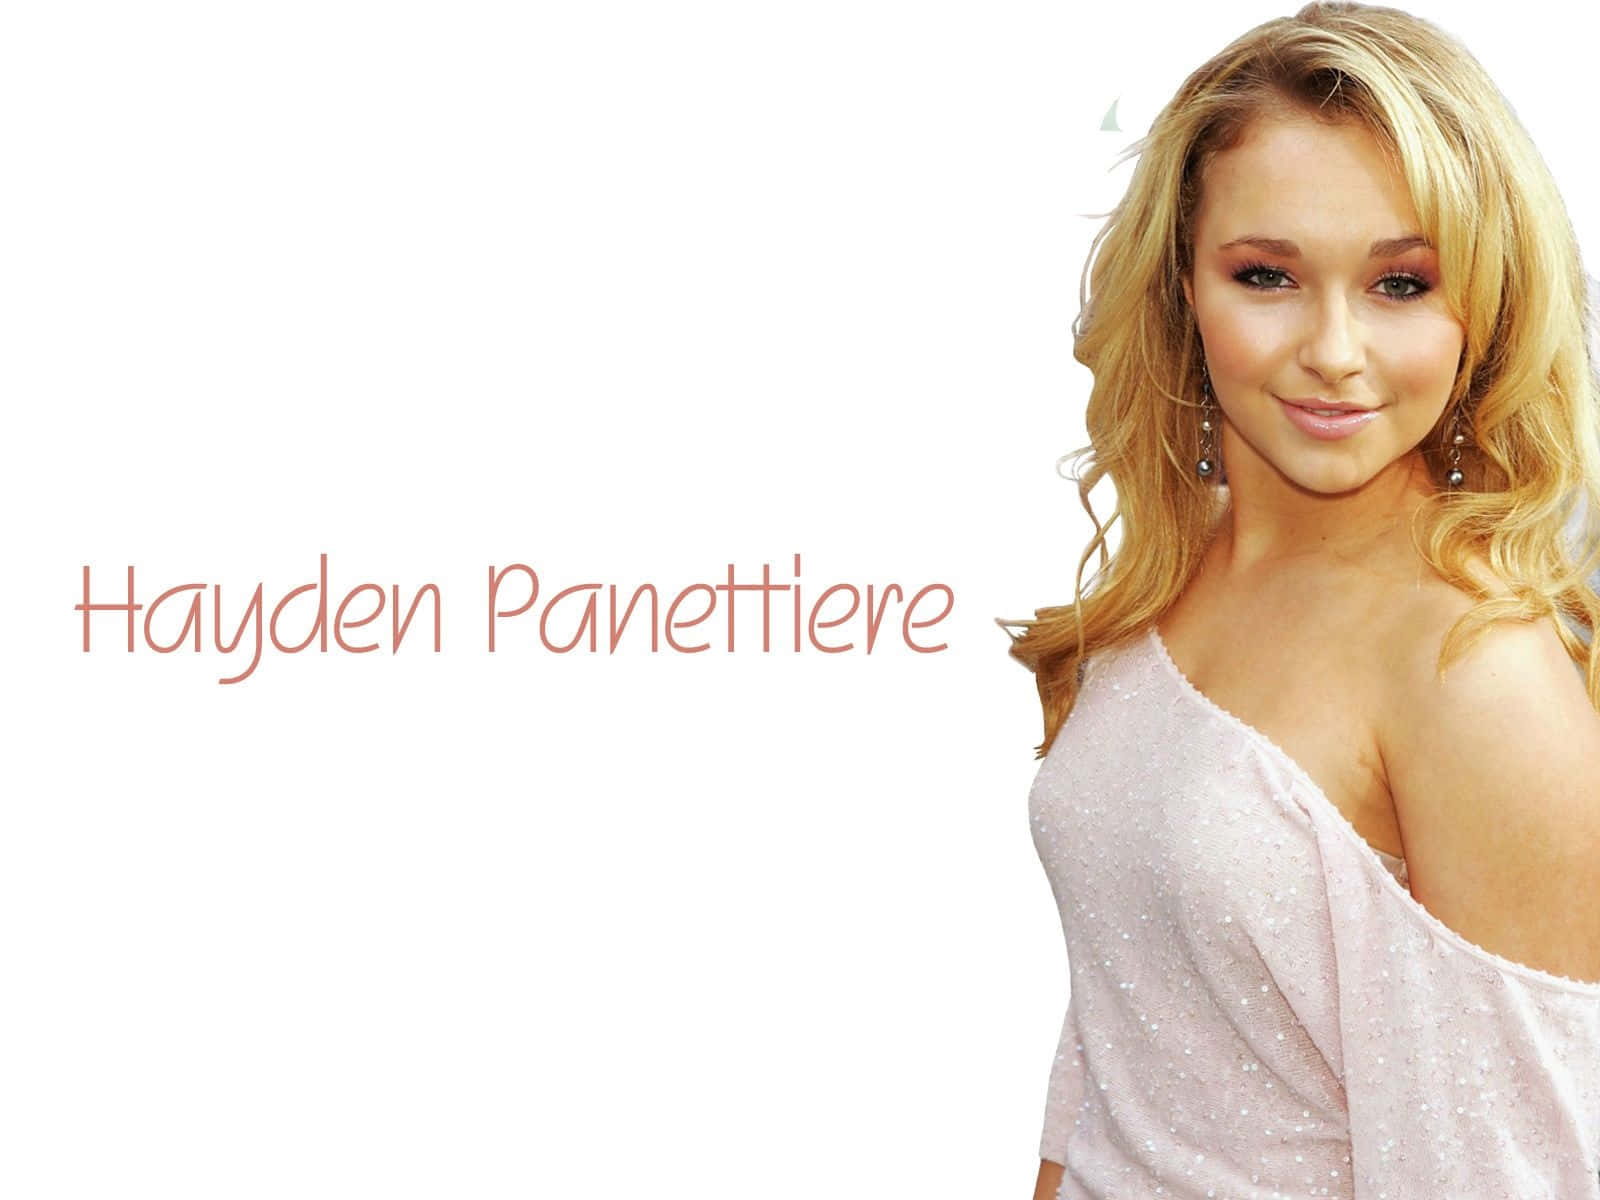 Hayden panettiere 1080P 2K 4K 5K HD wallpapers free download  Wallpaper  Flare